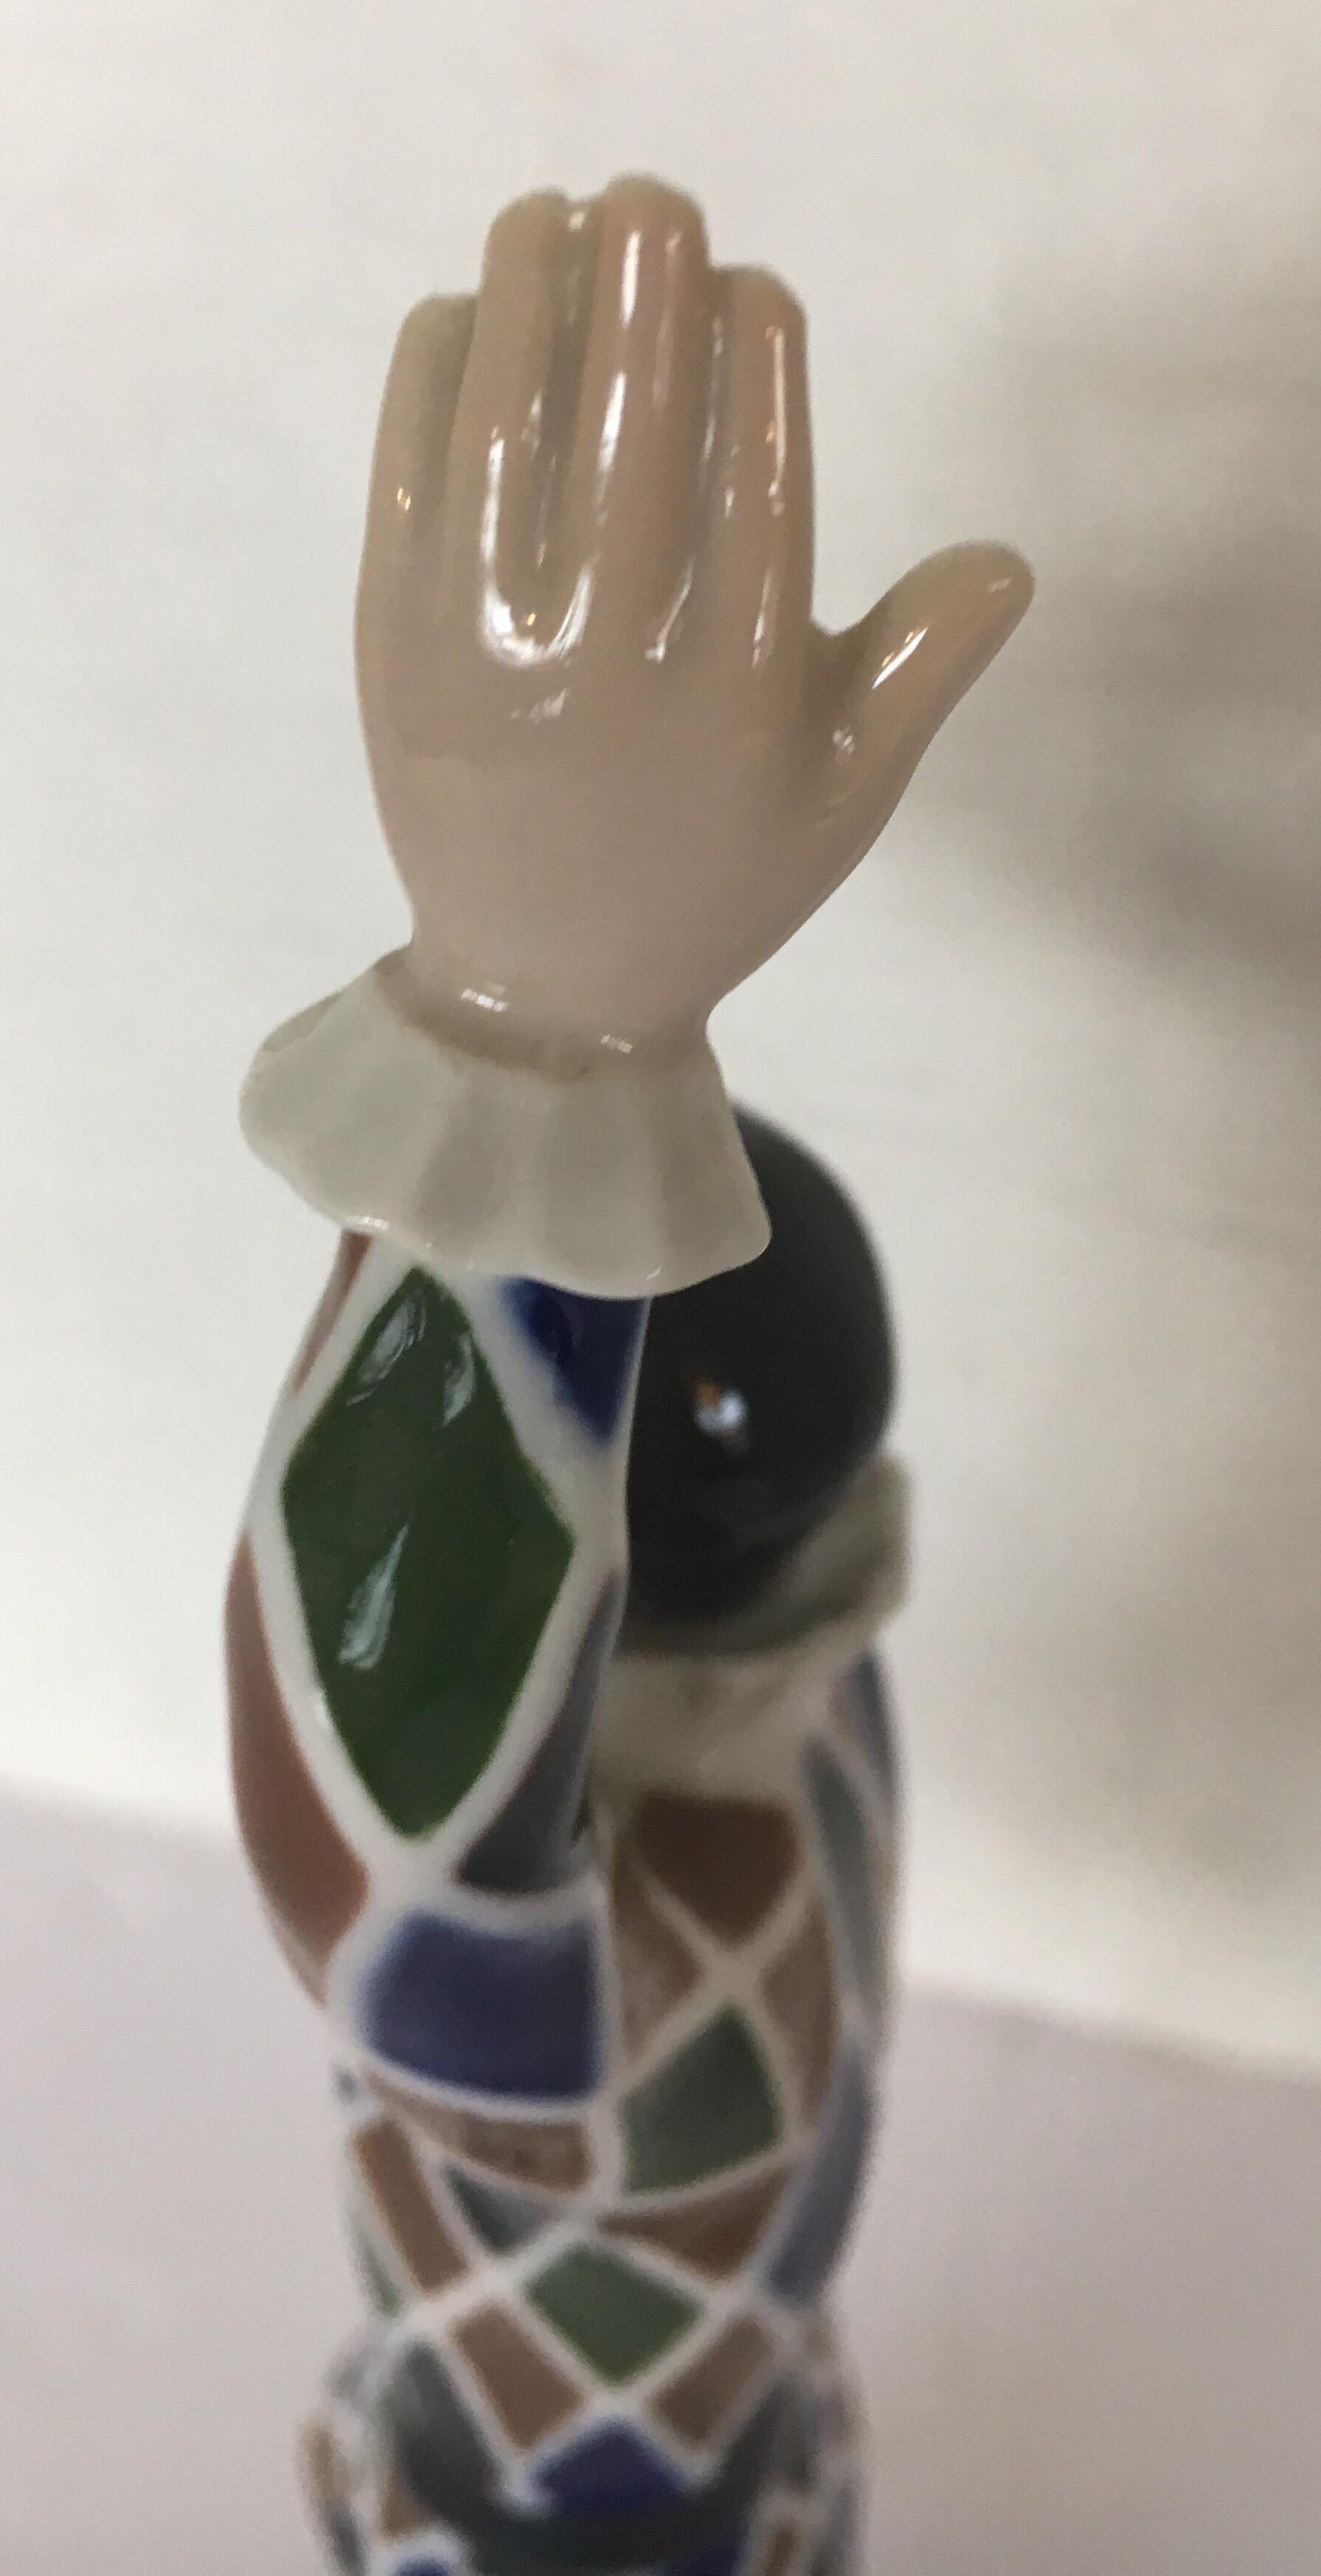 b&g vase made in italy